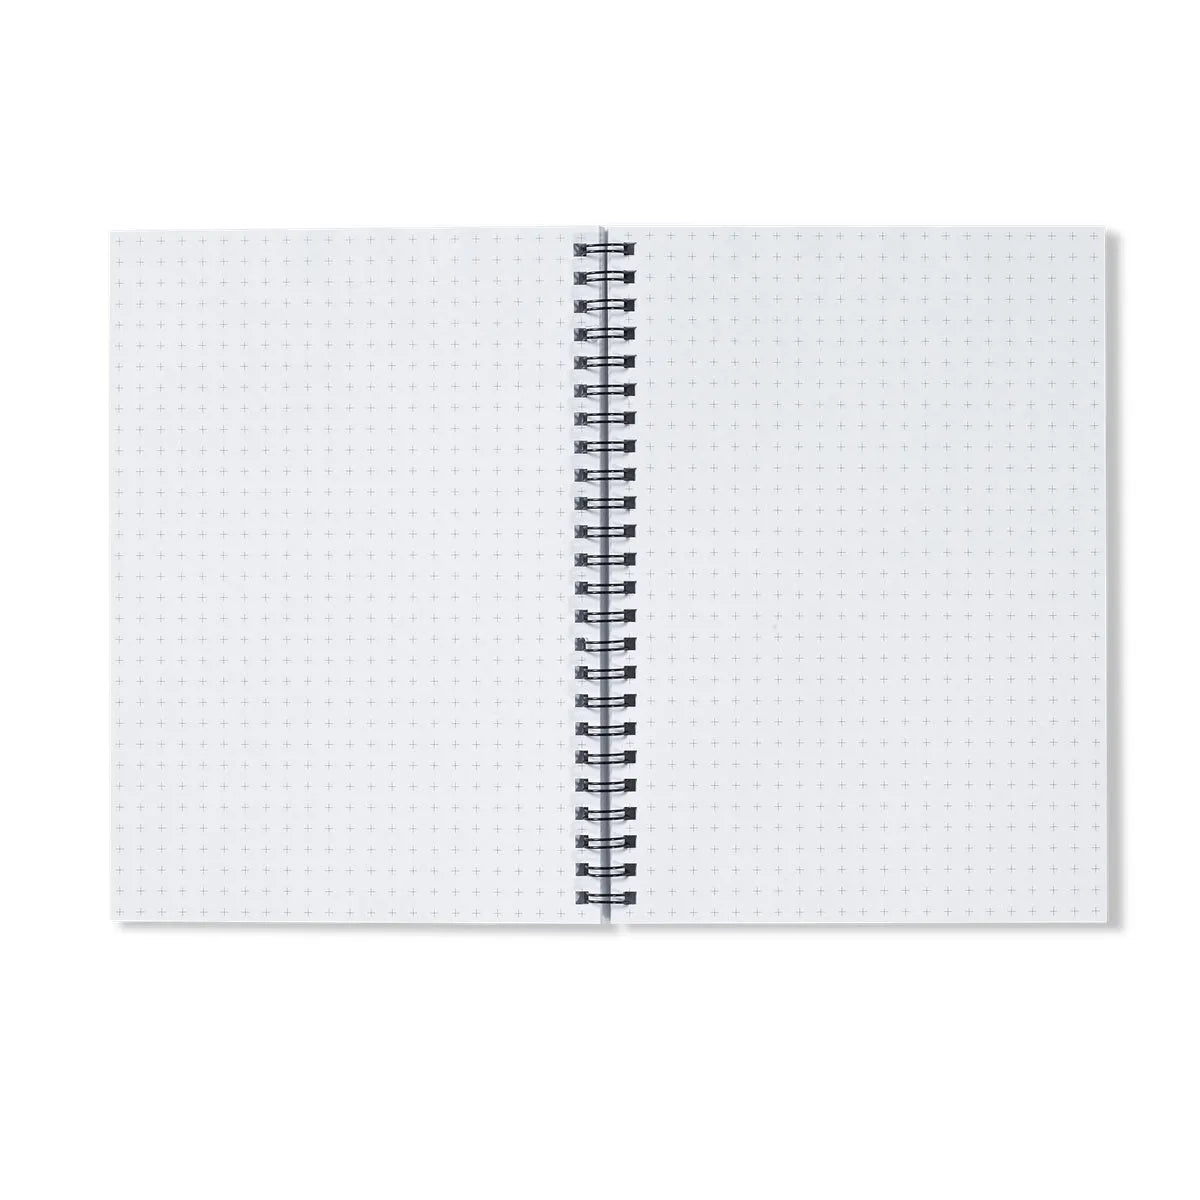 Honeysuckle Too By William Morris Notebook - Notebooks & Notepads - Aesthetic Art